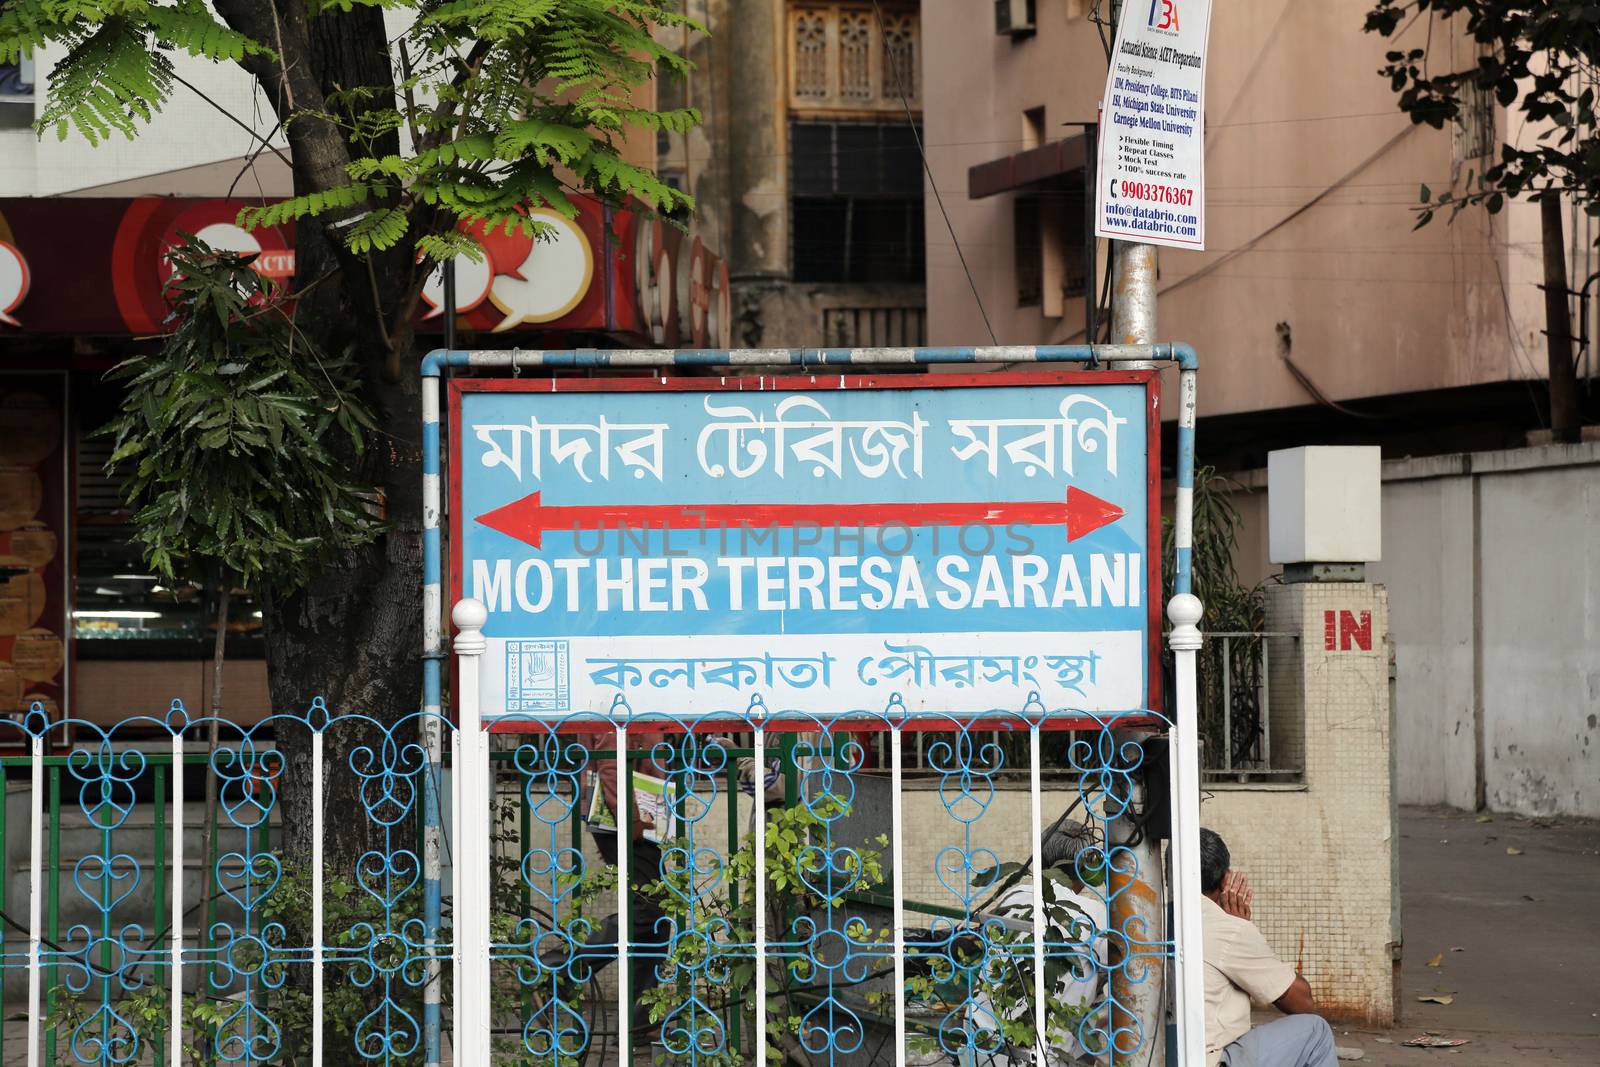 Mother Teresa Sarani former Park street renamed after the death of Mother Teresa in Kolkata by atlas